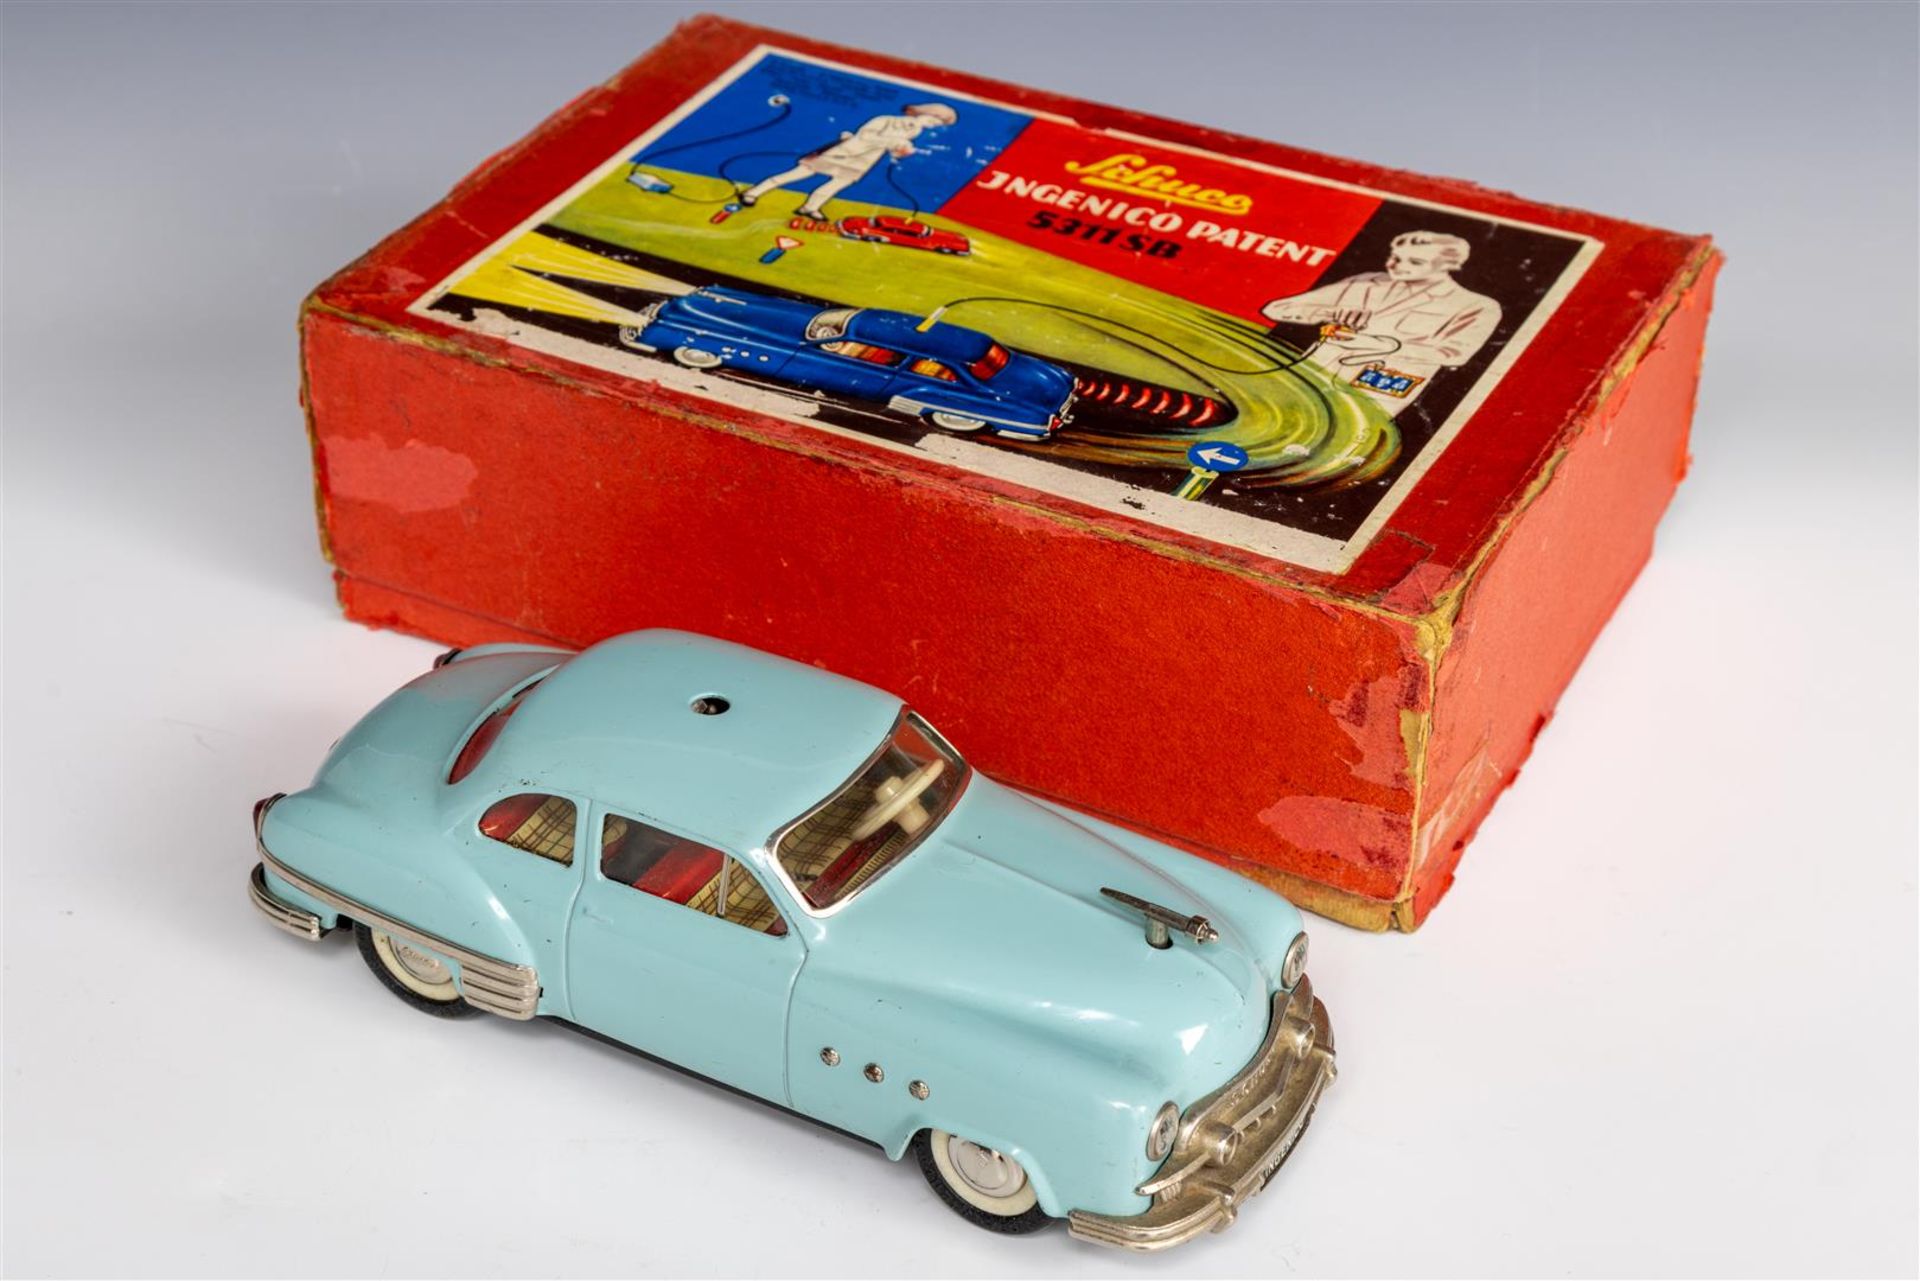 A Schuco Ingenico Patent 5311SB model car in original box. Germany, 1950 - 1959. - Bild 2 aus 3